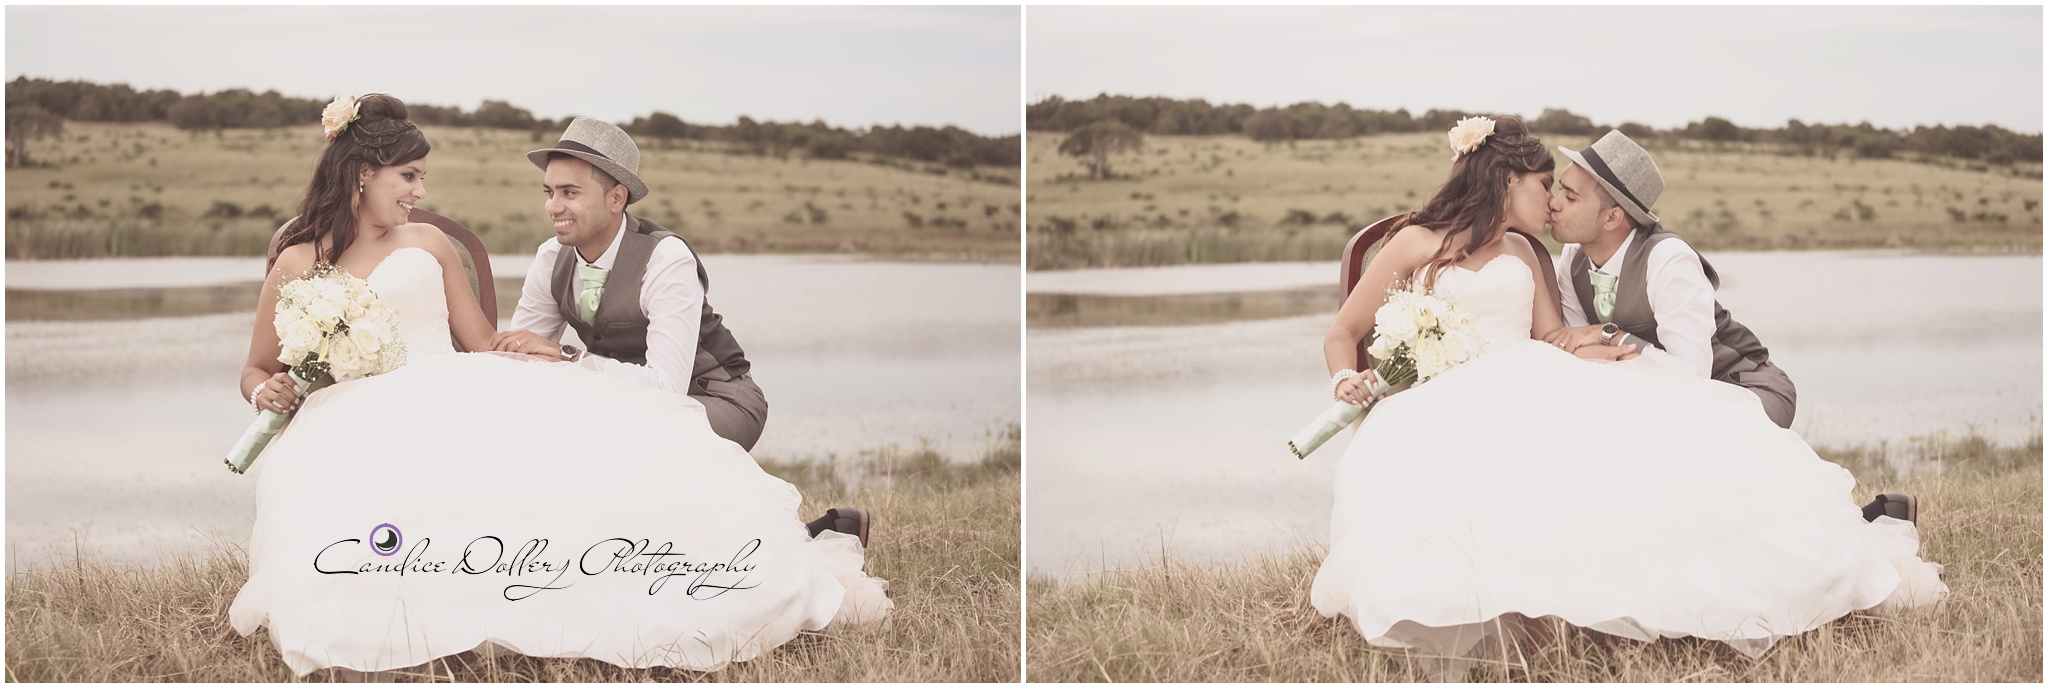 Paula & Jaycee's Wedding - Cypress Dale - Candice Dollery Photography_3102